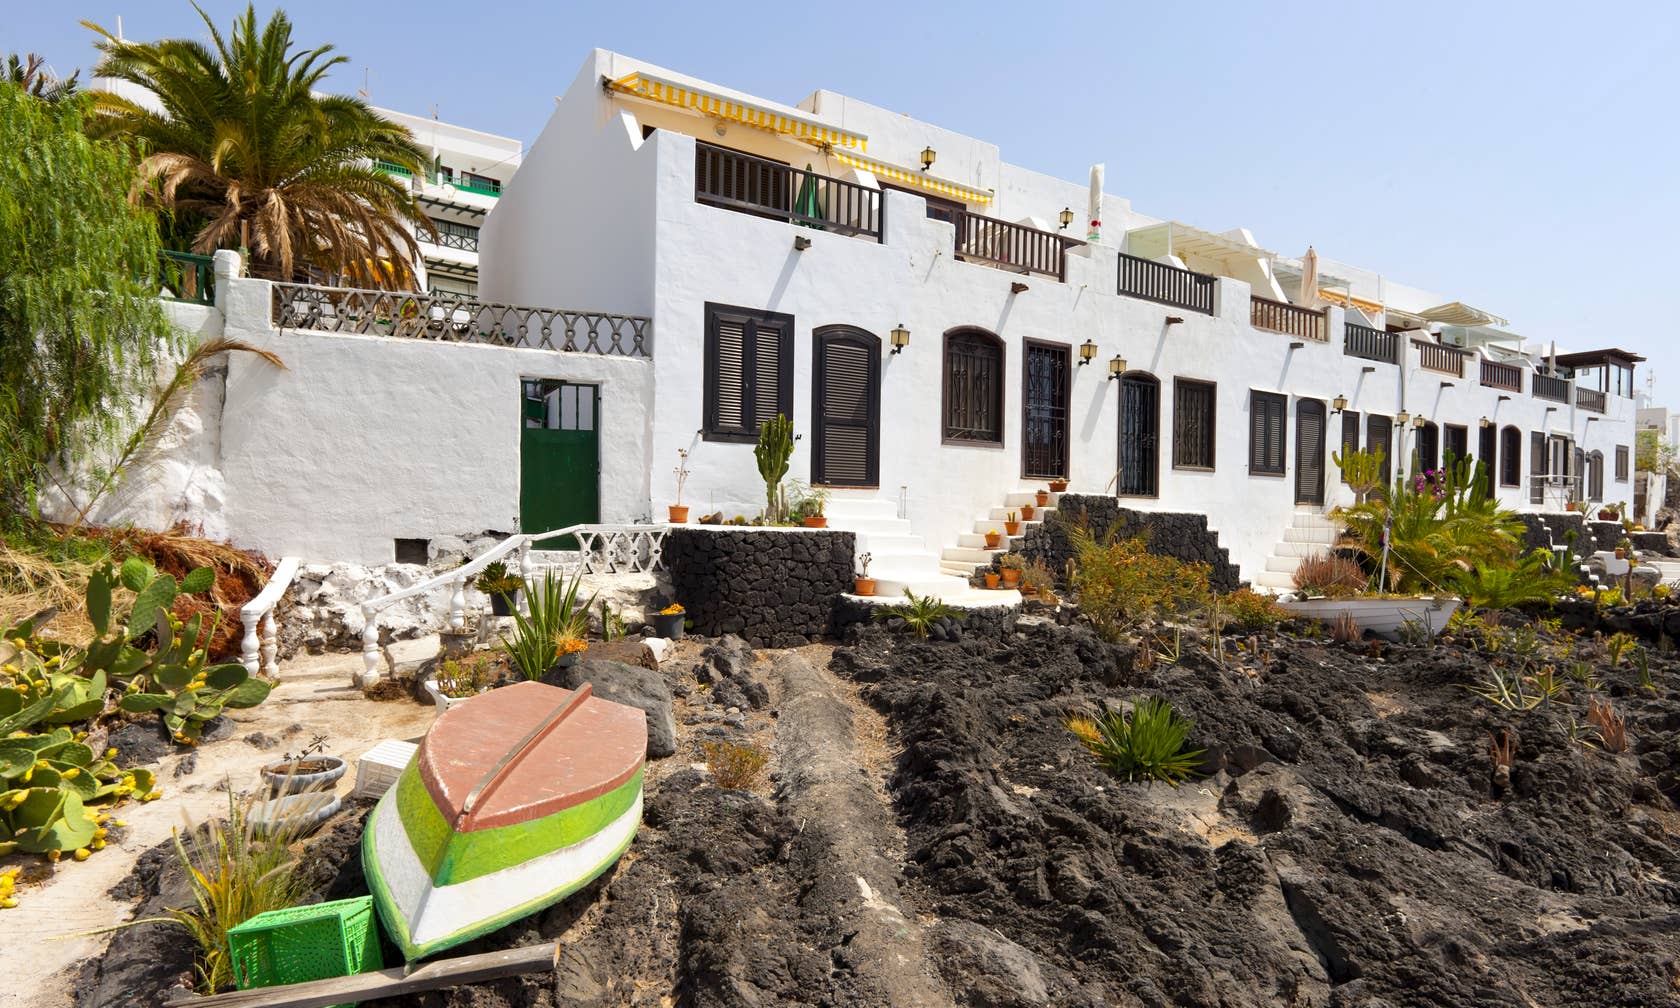 Holiday rental apartments in Puerto del Carmen